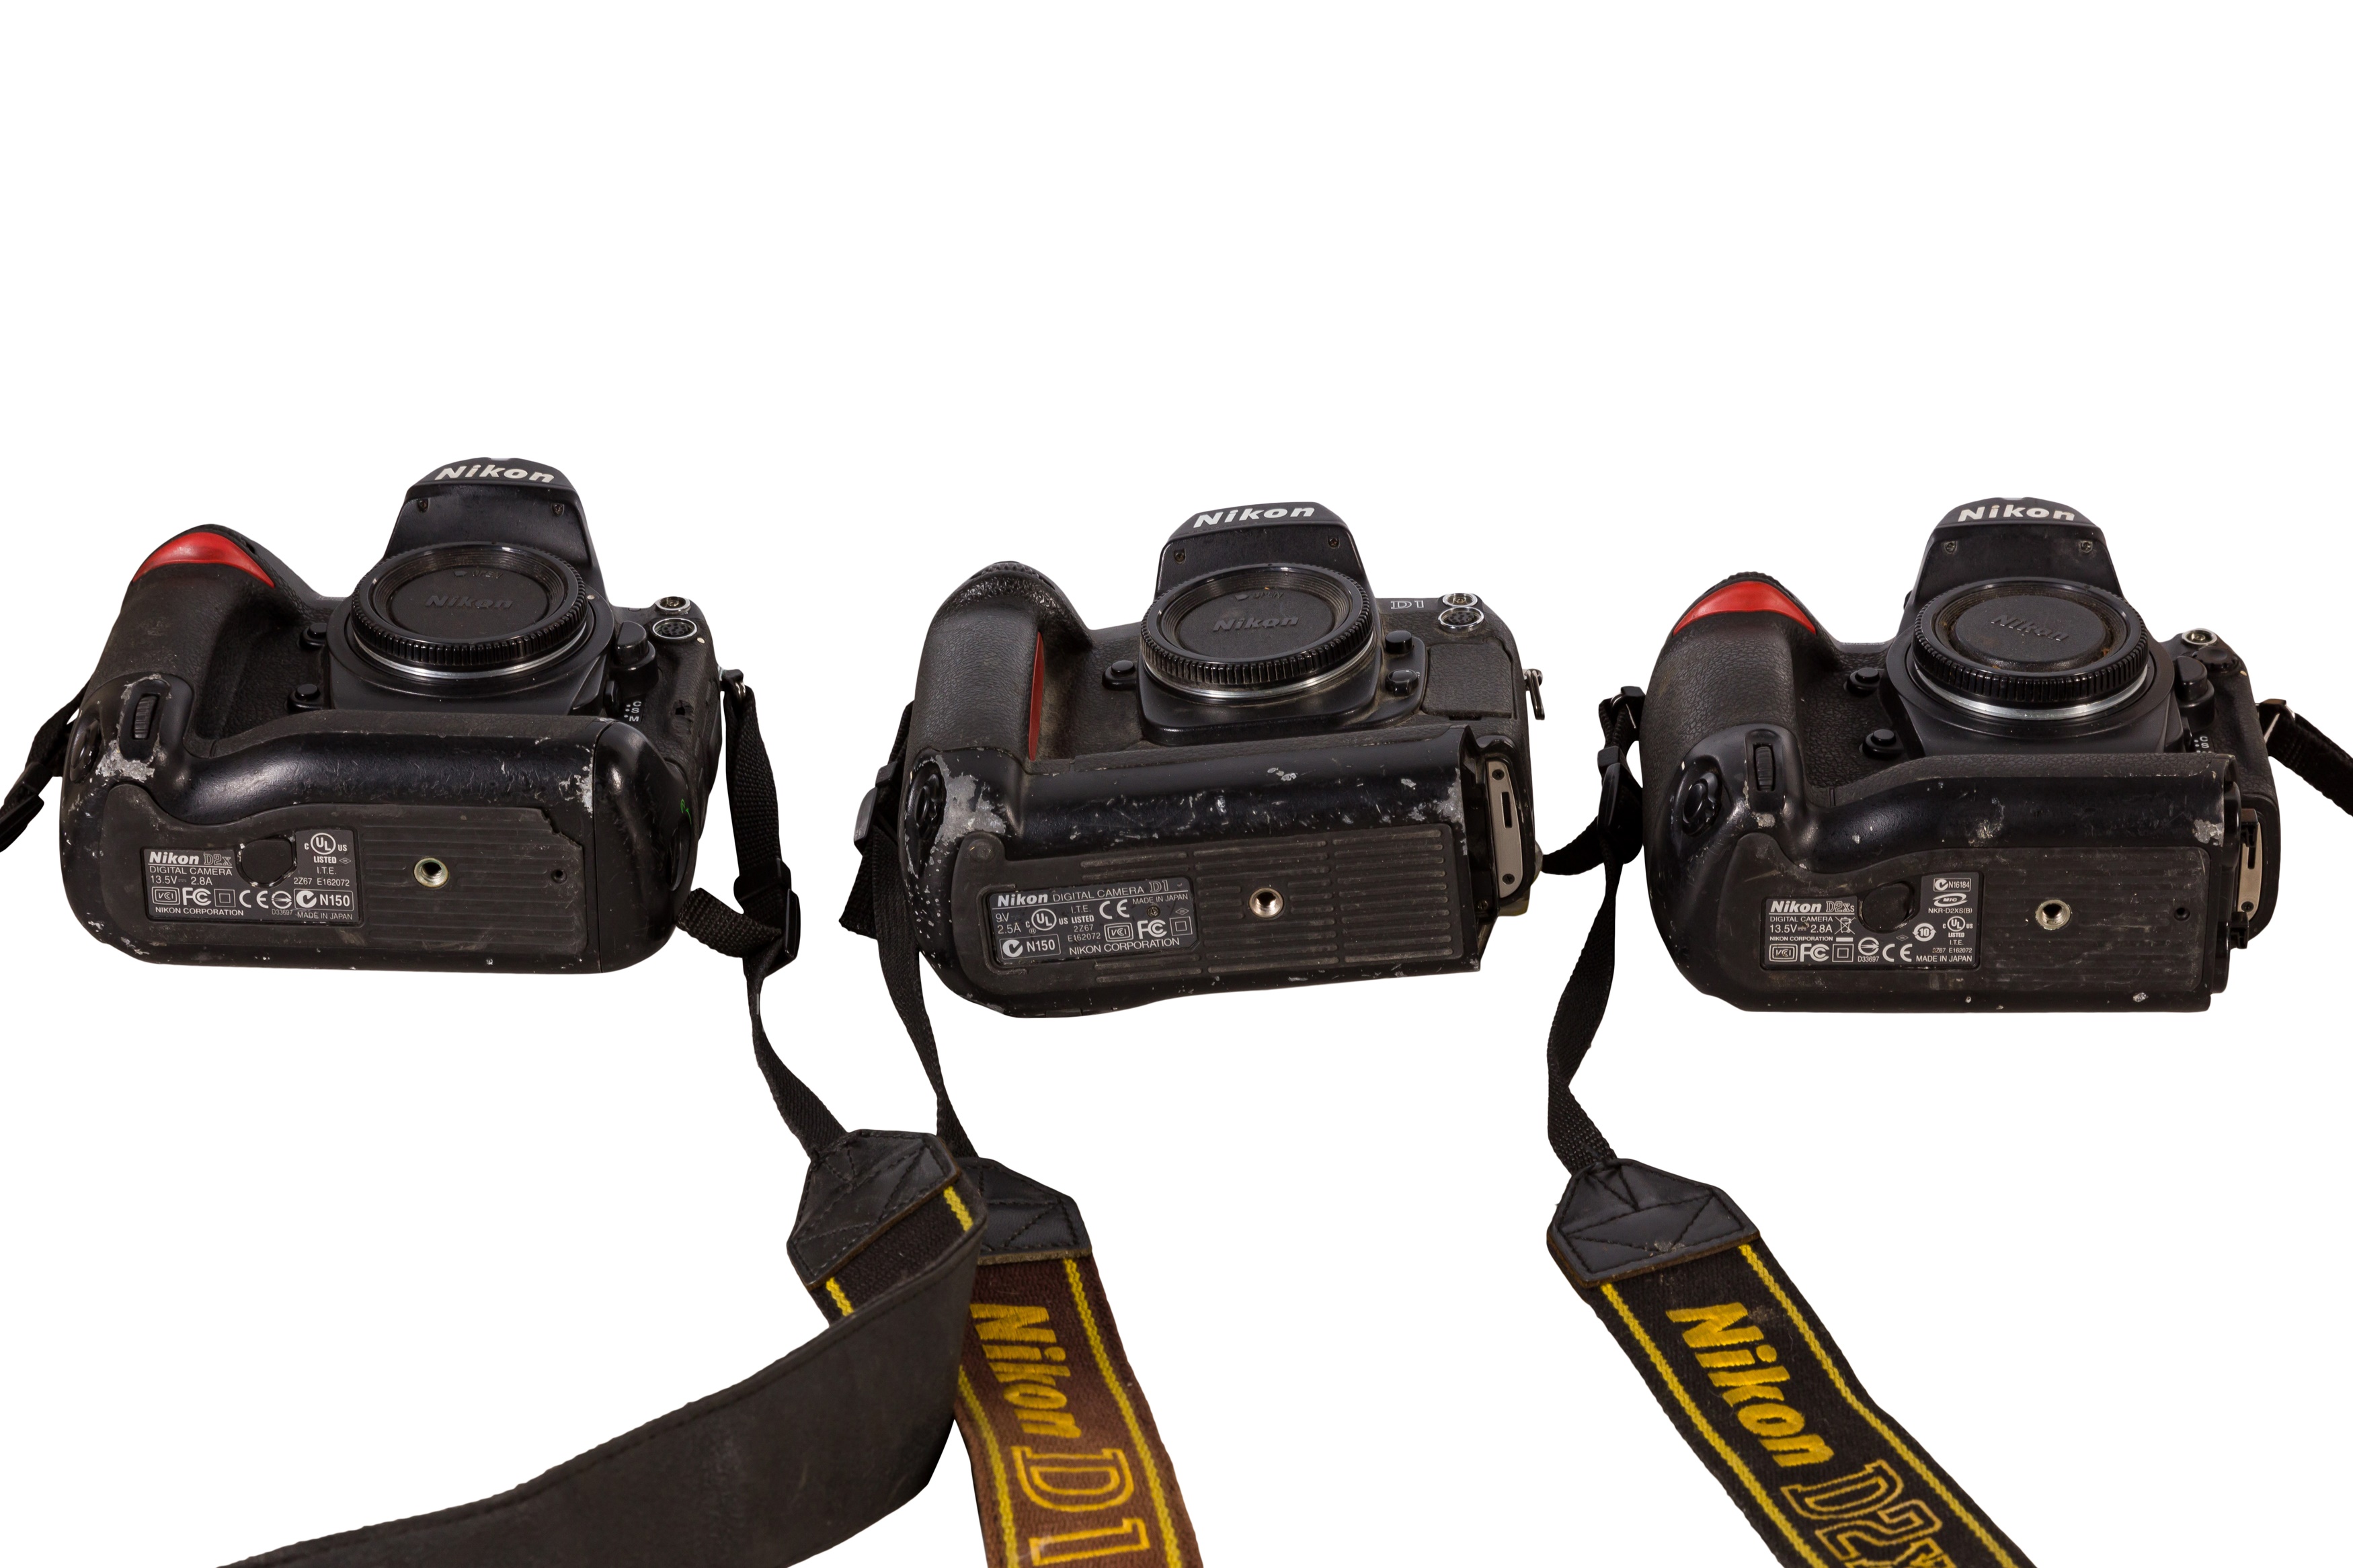 A Selection of Professional Nikon DSLR Cameras - Image 3 of 3